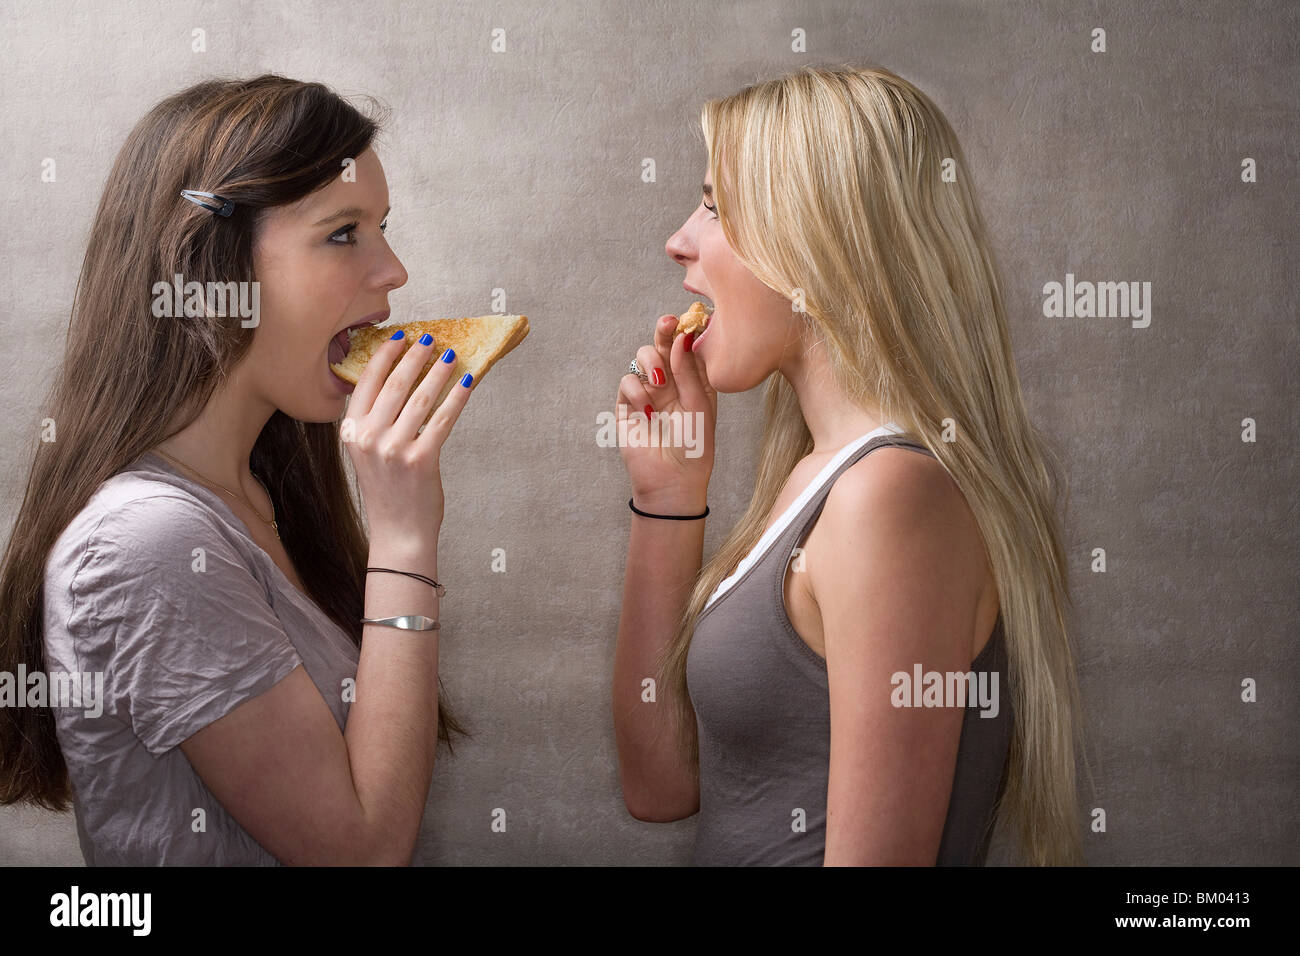 Teen girls eat sandwiches Stock Photo